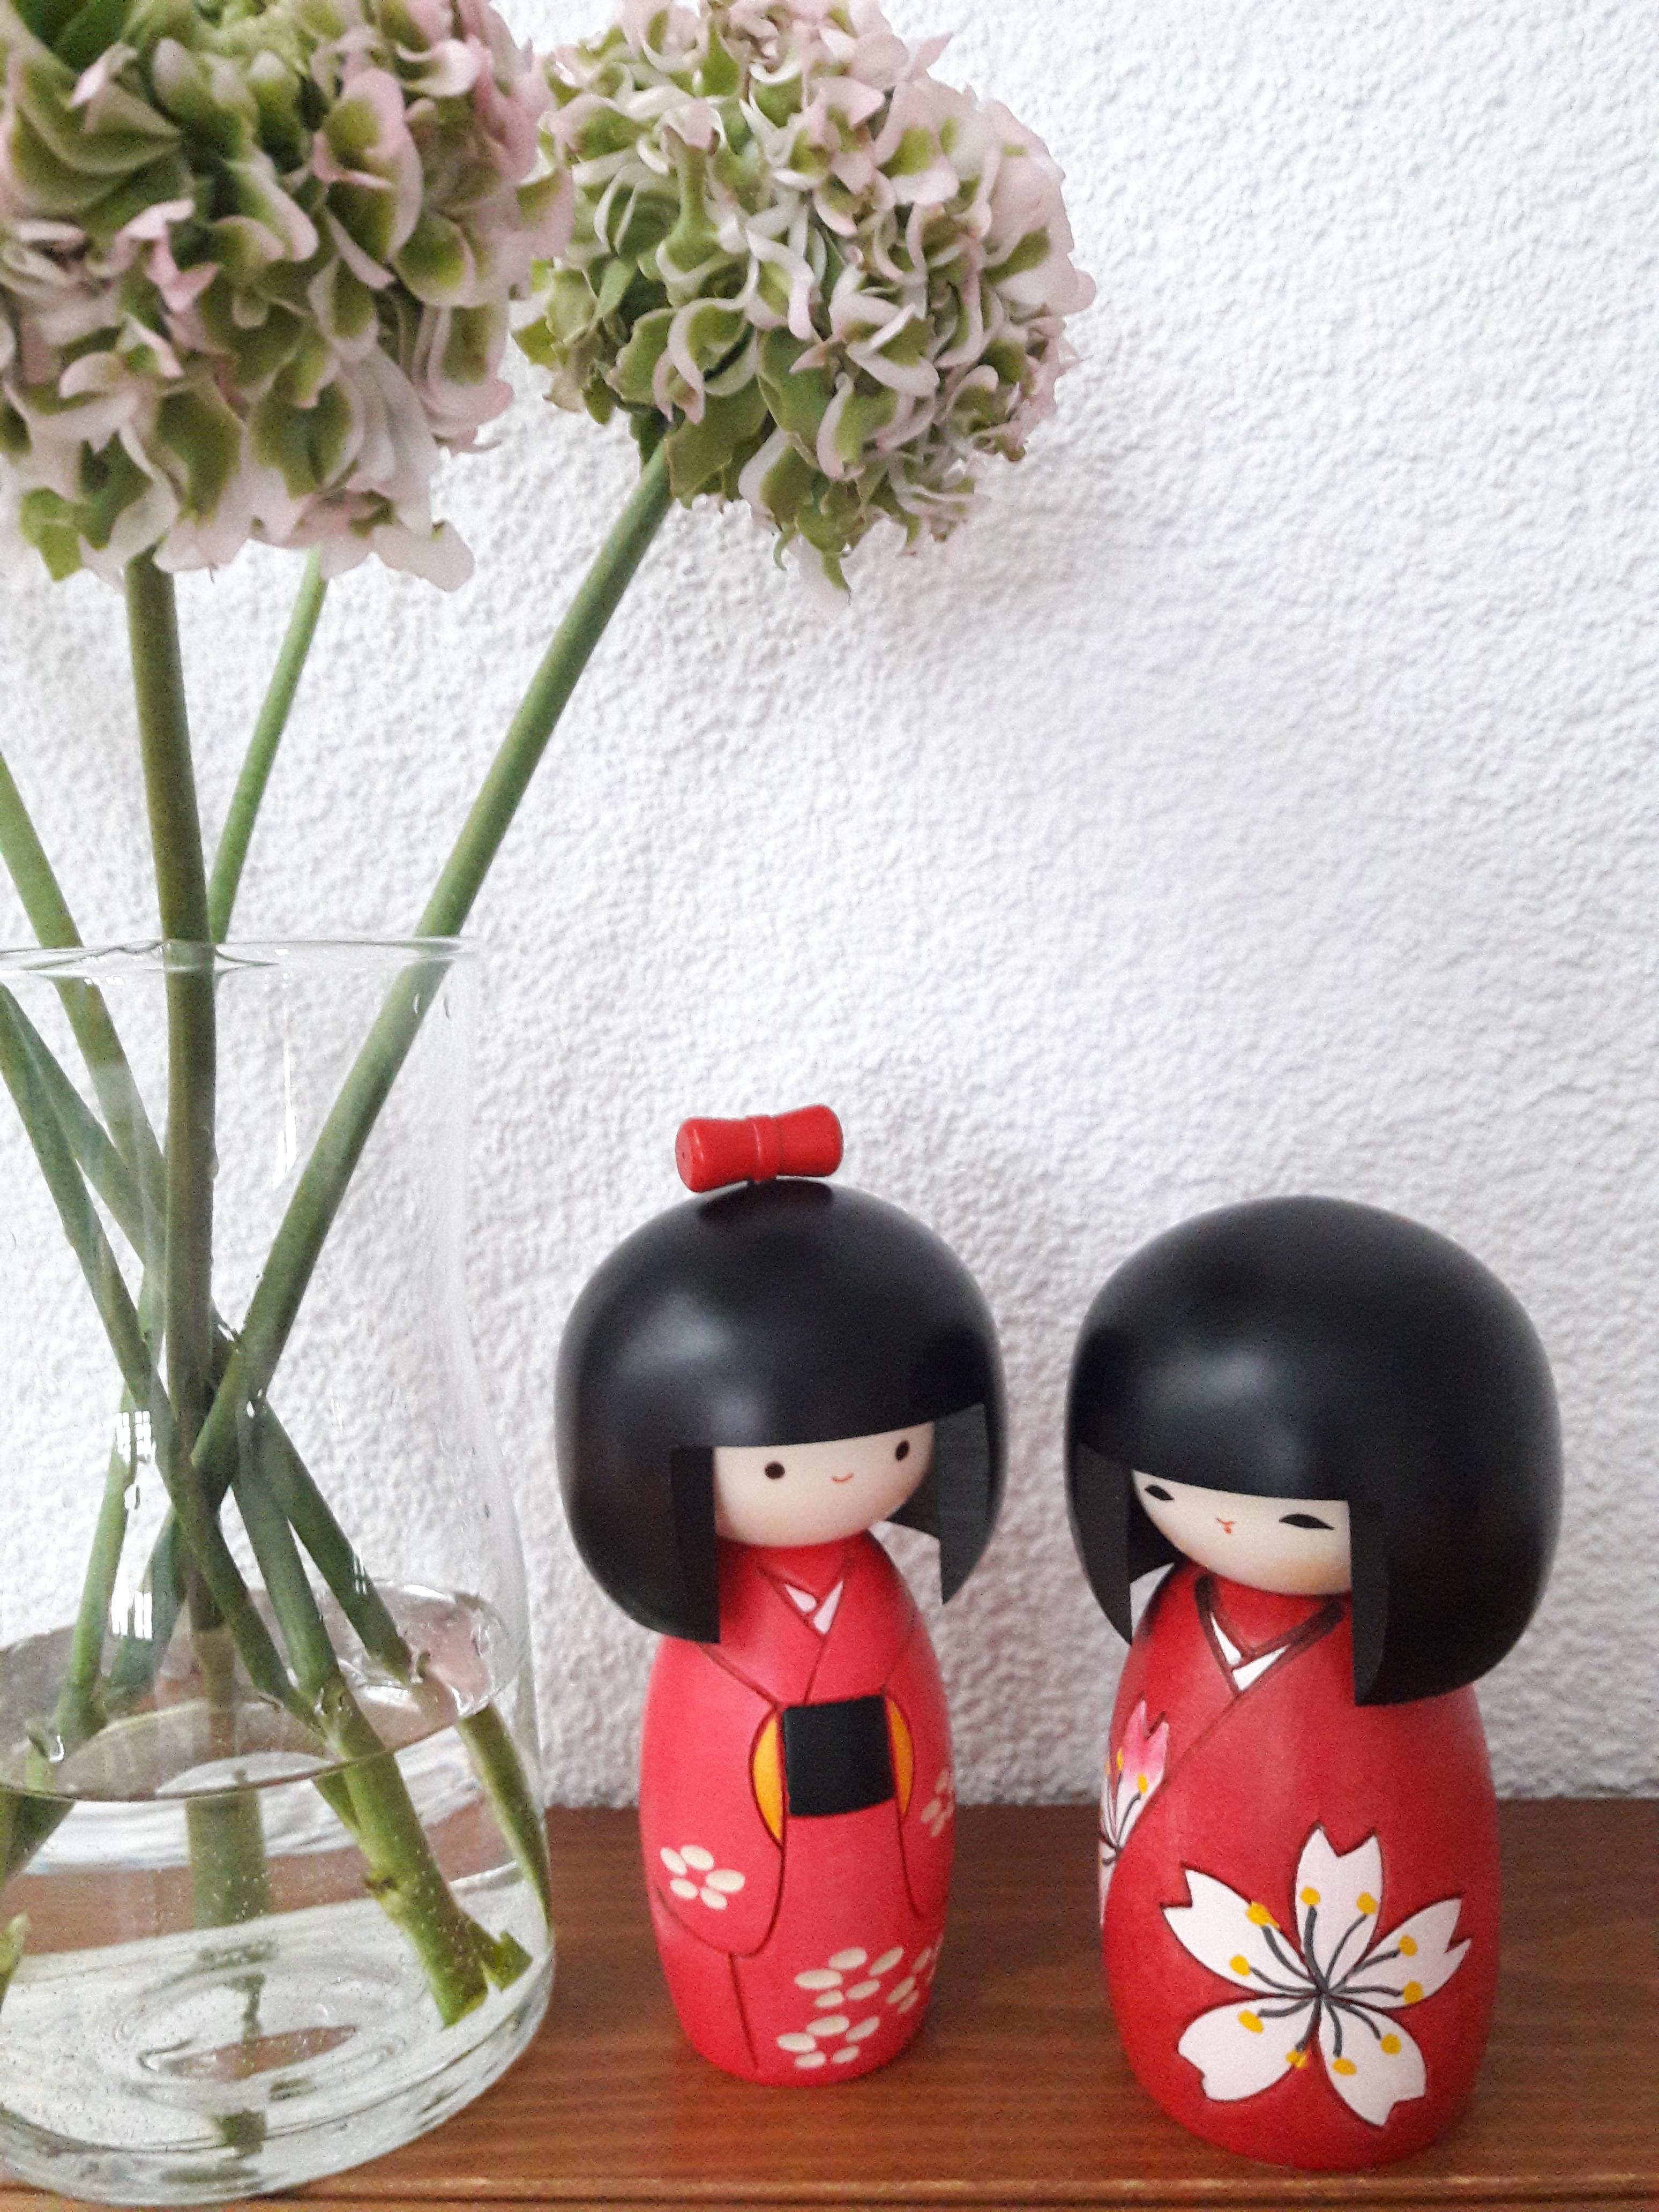 Danke Kumiko! 💞
#kokeshi #sehrverliebt #japan #puppe #holz #niedlich #kawaii #deko #kimono